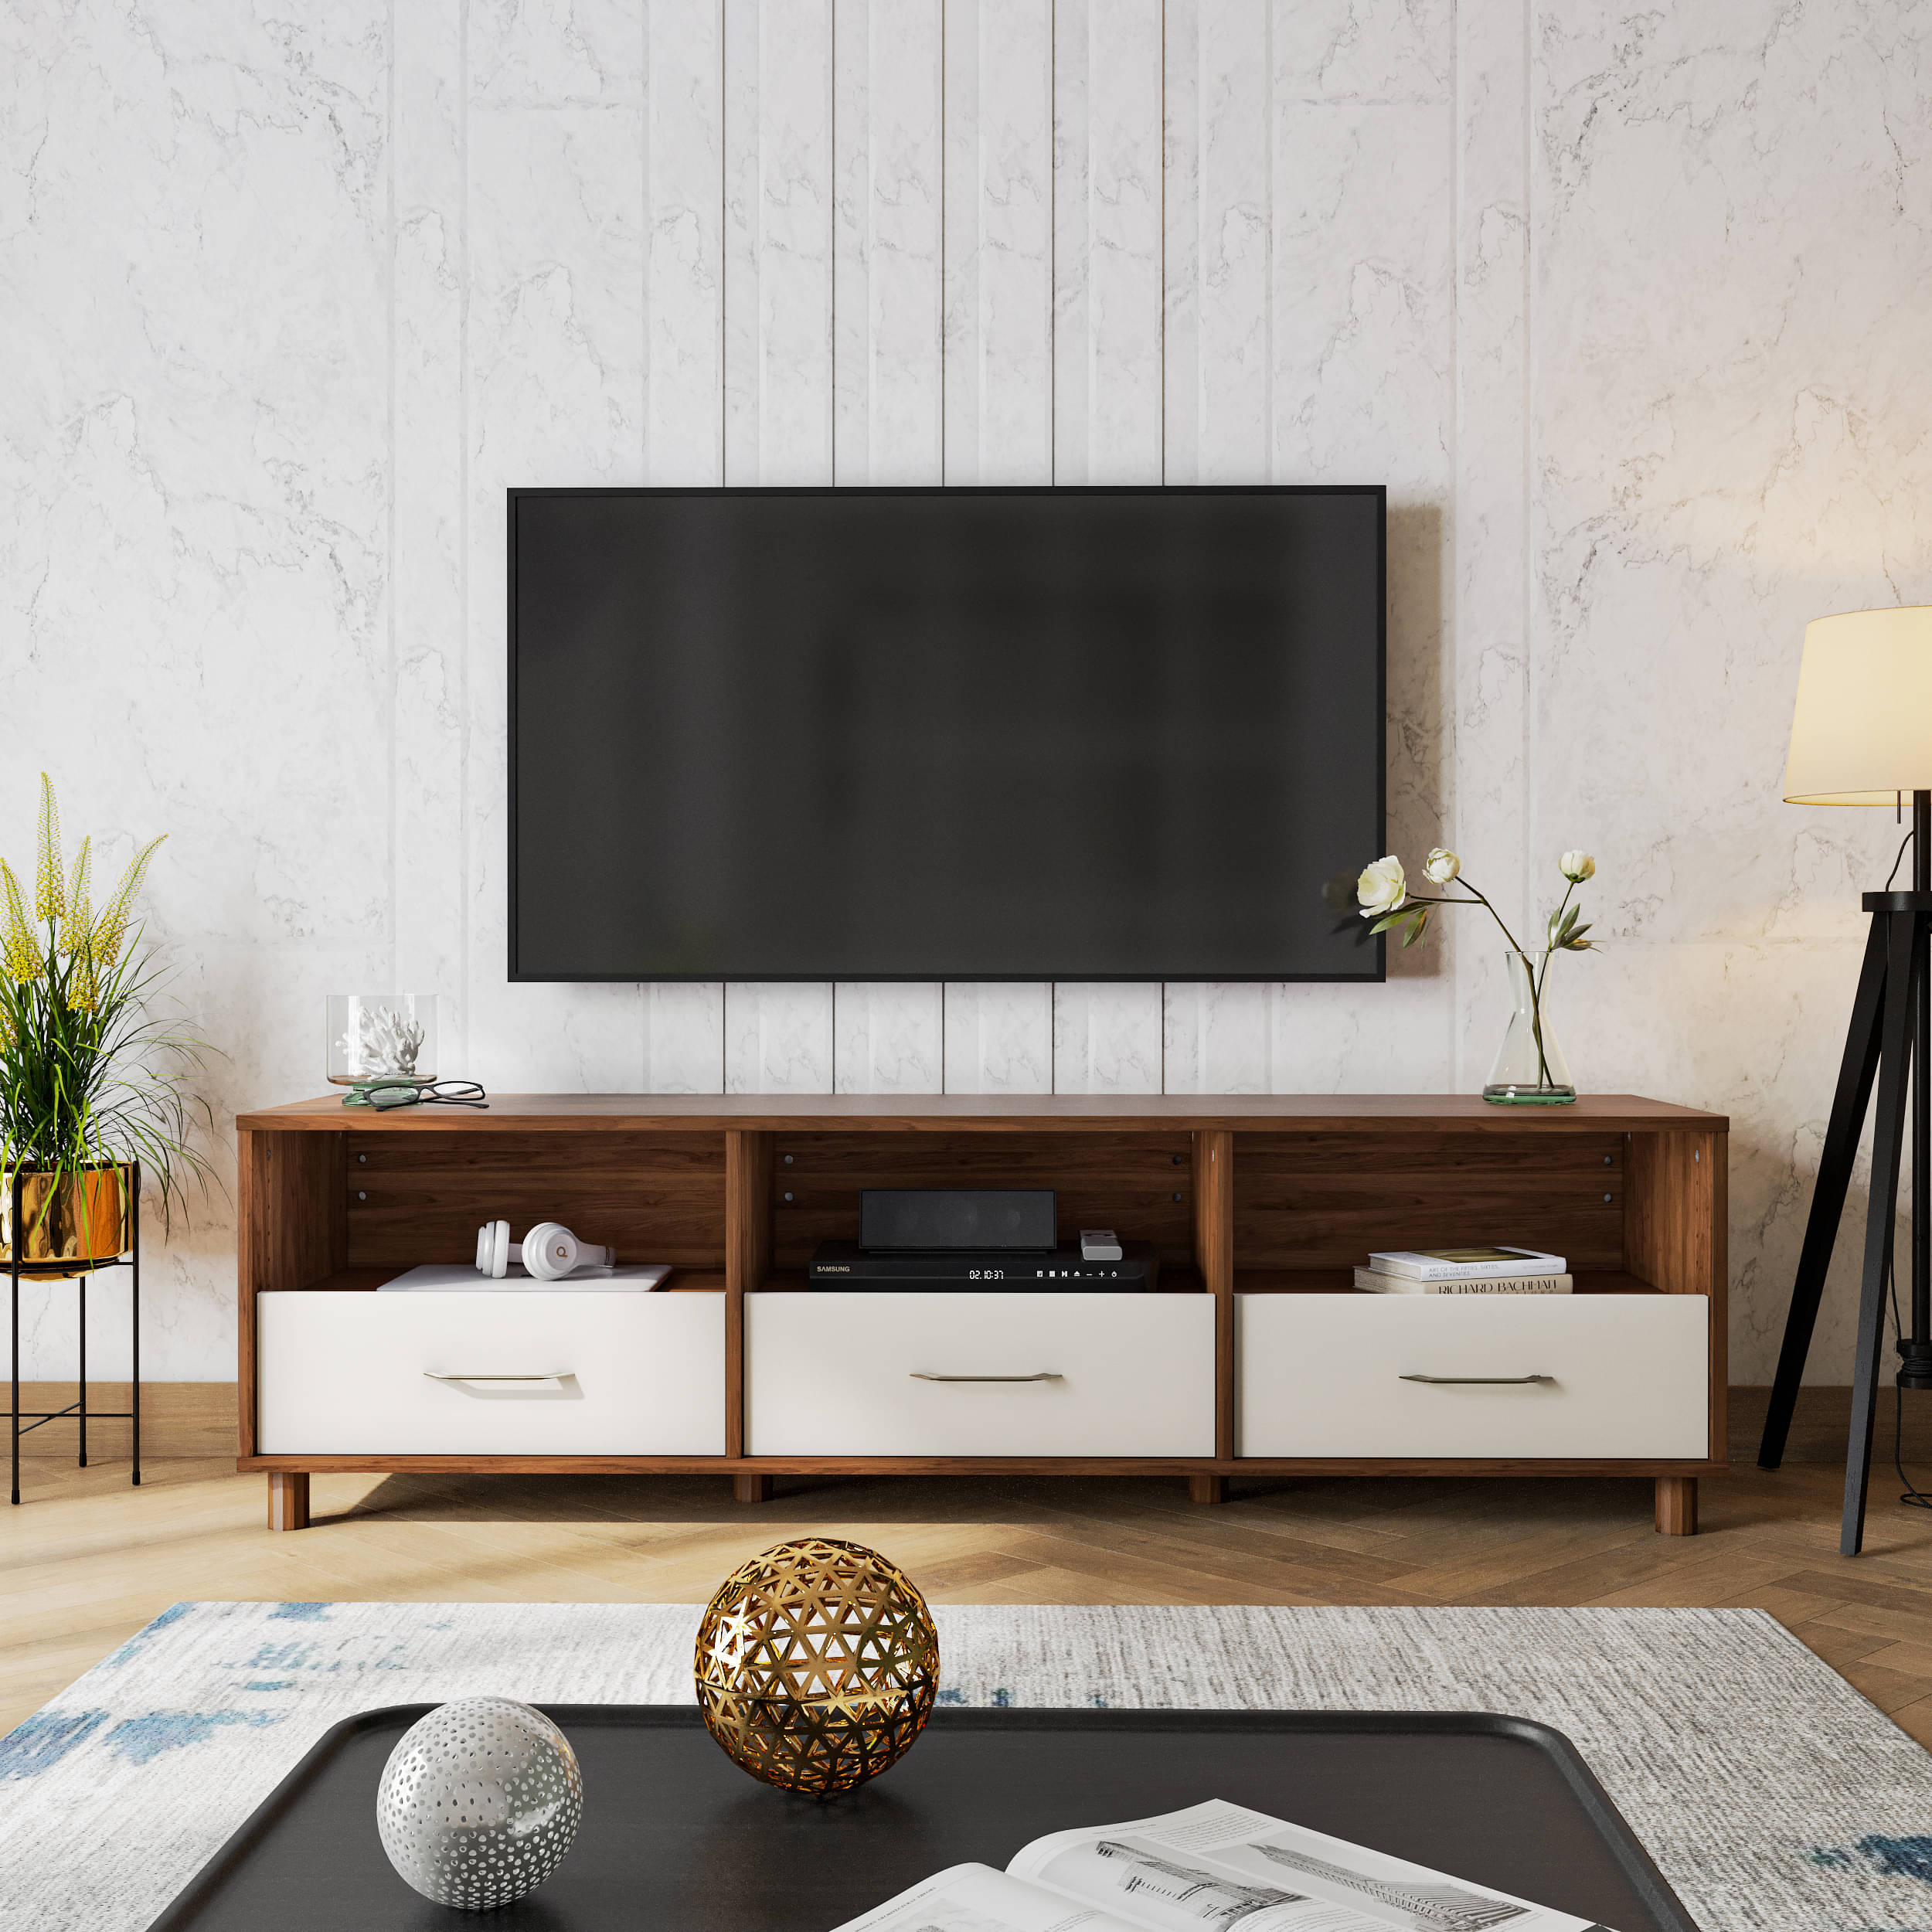 LIVING ROOM TV CABINET DESIGN IN CHENNAI - Blueinteriorchennai - Medium